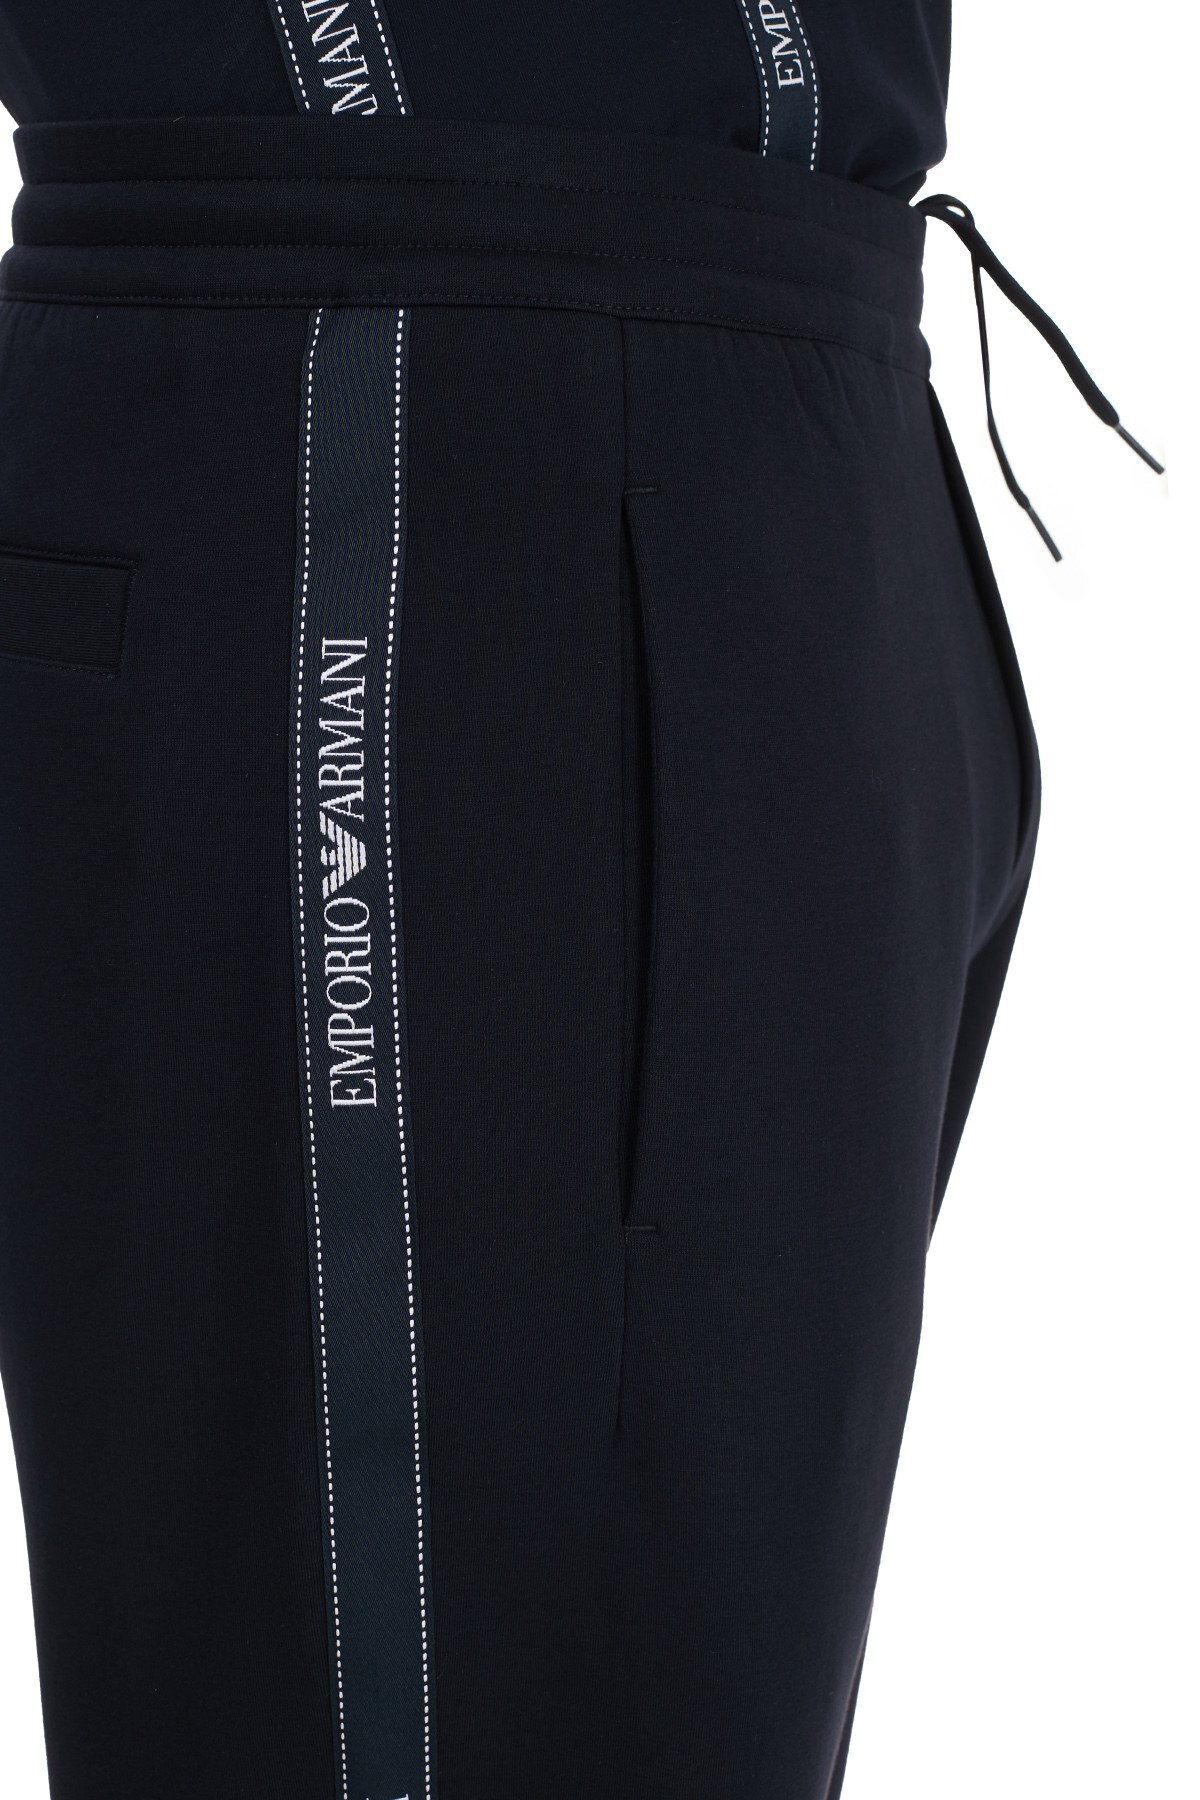 Emporio Armani Logo Bantlı Pamuklu Jogger Pantolon Erkek Eşofman Altı S 6H1P50 1JHSZ 0920 LACİVERT